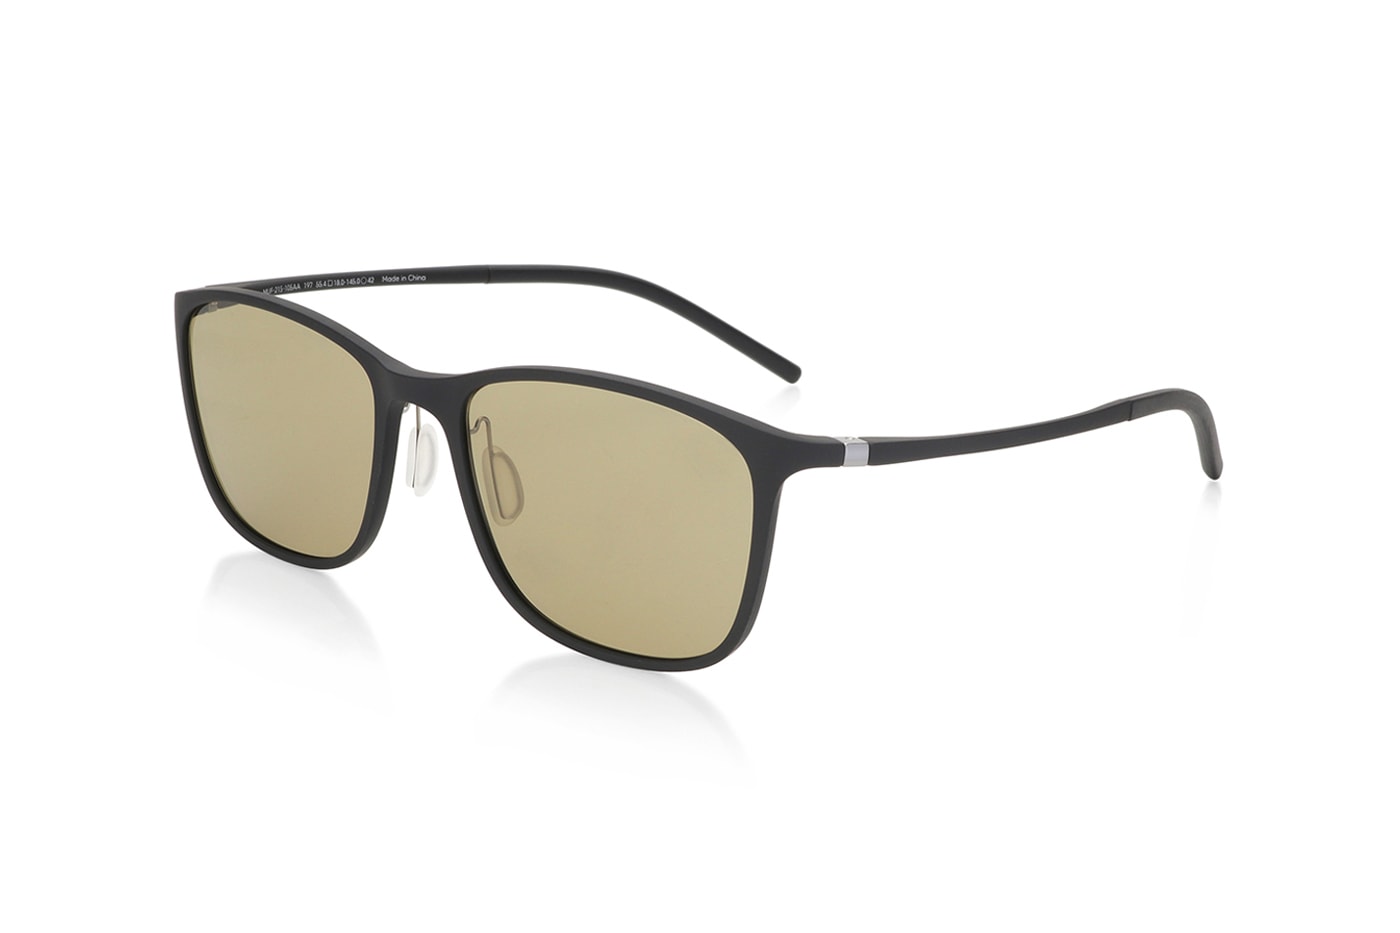 JINS and SUN NIGO Sunglasses Collection Release | Hypebeast